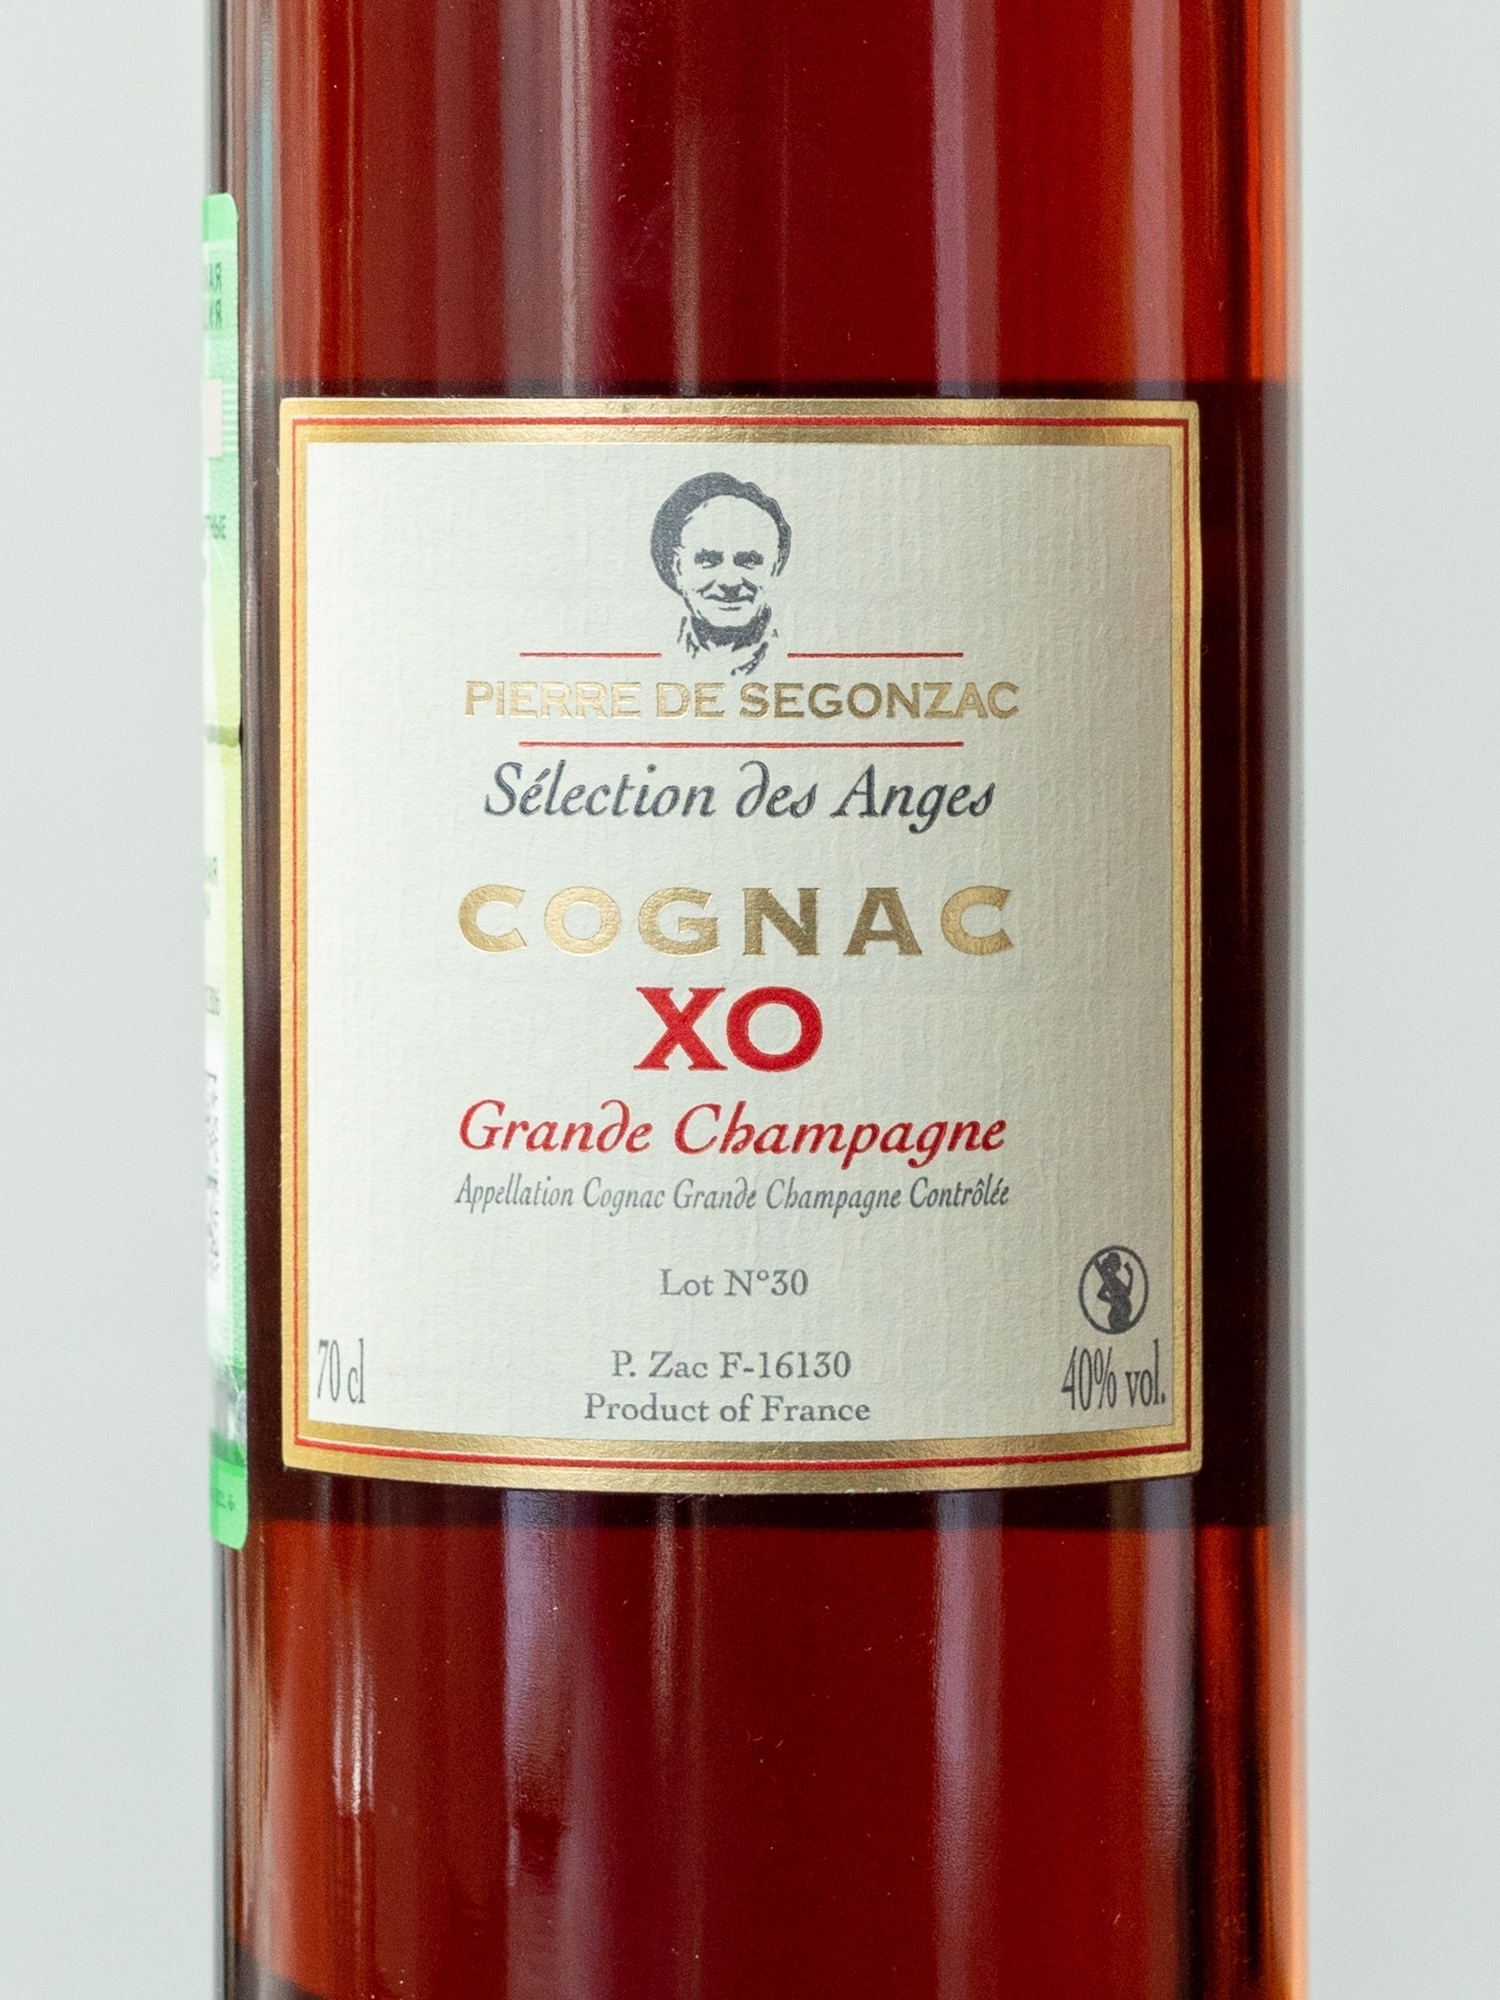 Коньяк Pierre de Segonzac Selection des Anges XO Grande Champagne / Пьер де Сегонзак Коньяк Гранд Шампань Икс О Селексьон дез Анж